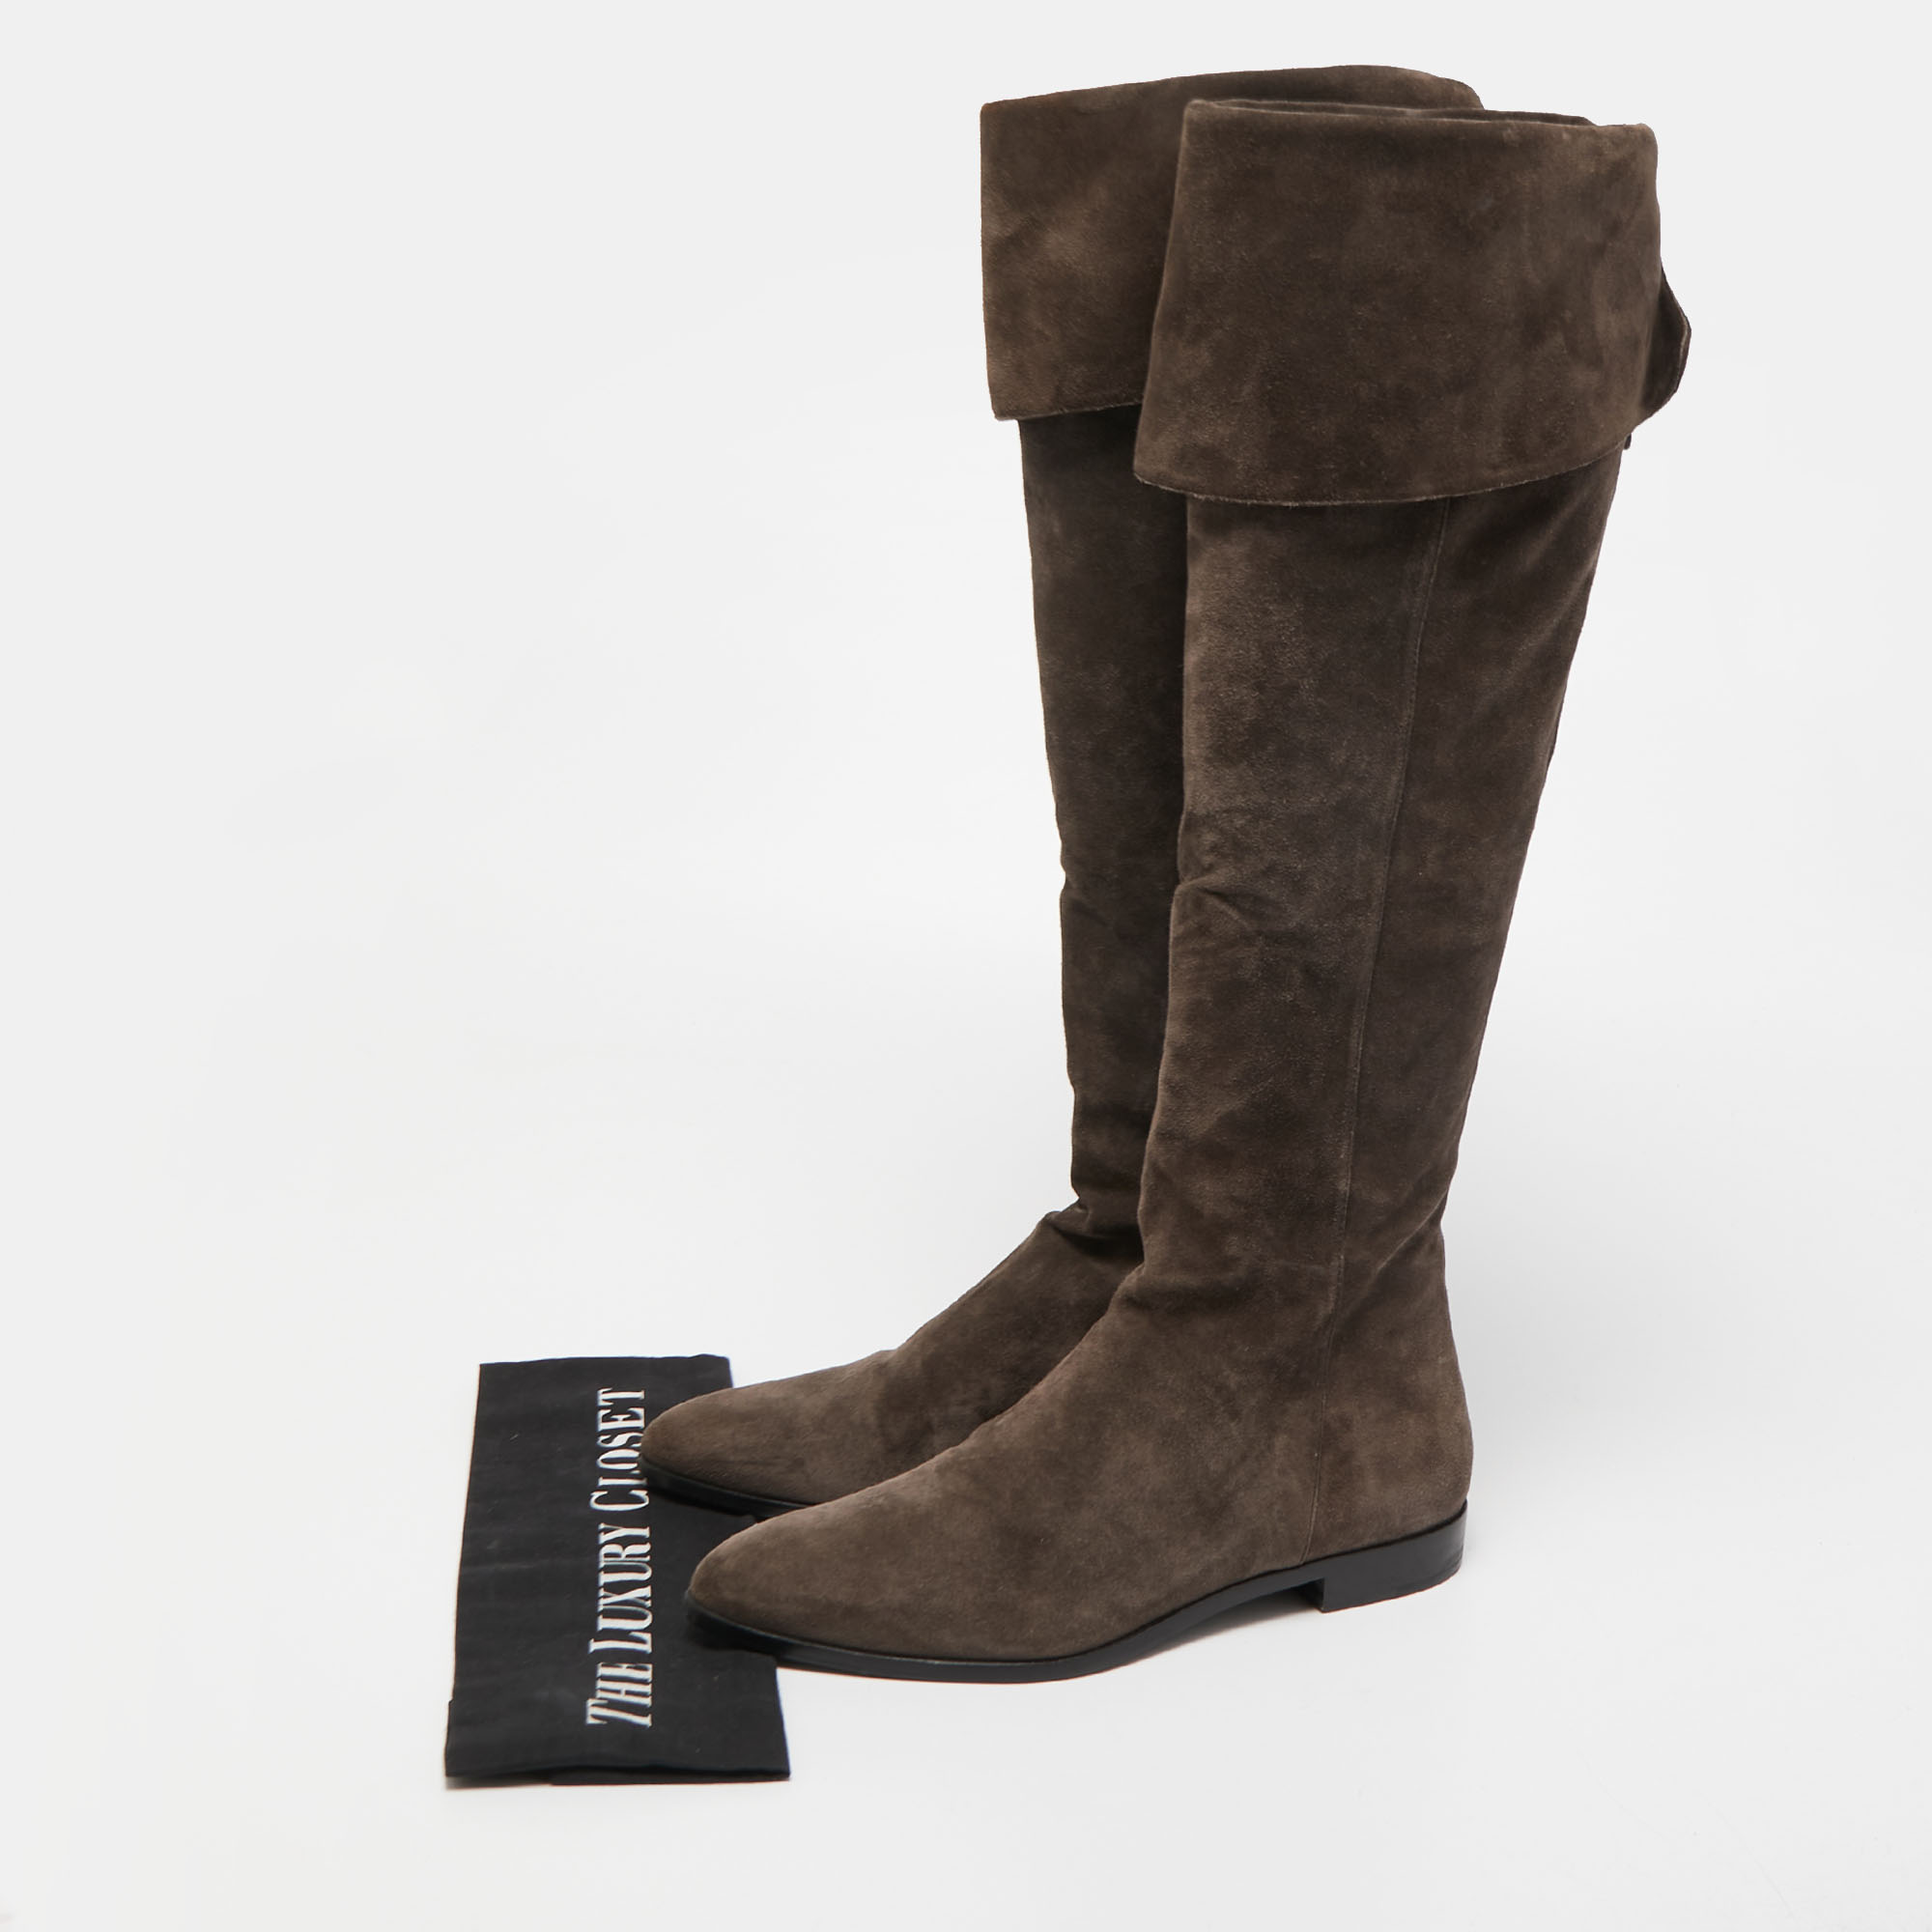 Prada Dark Brown Suede Fold Over Knee Length Boots Size 37